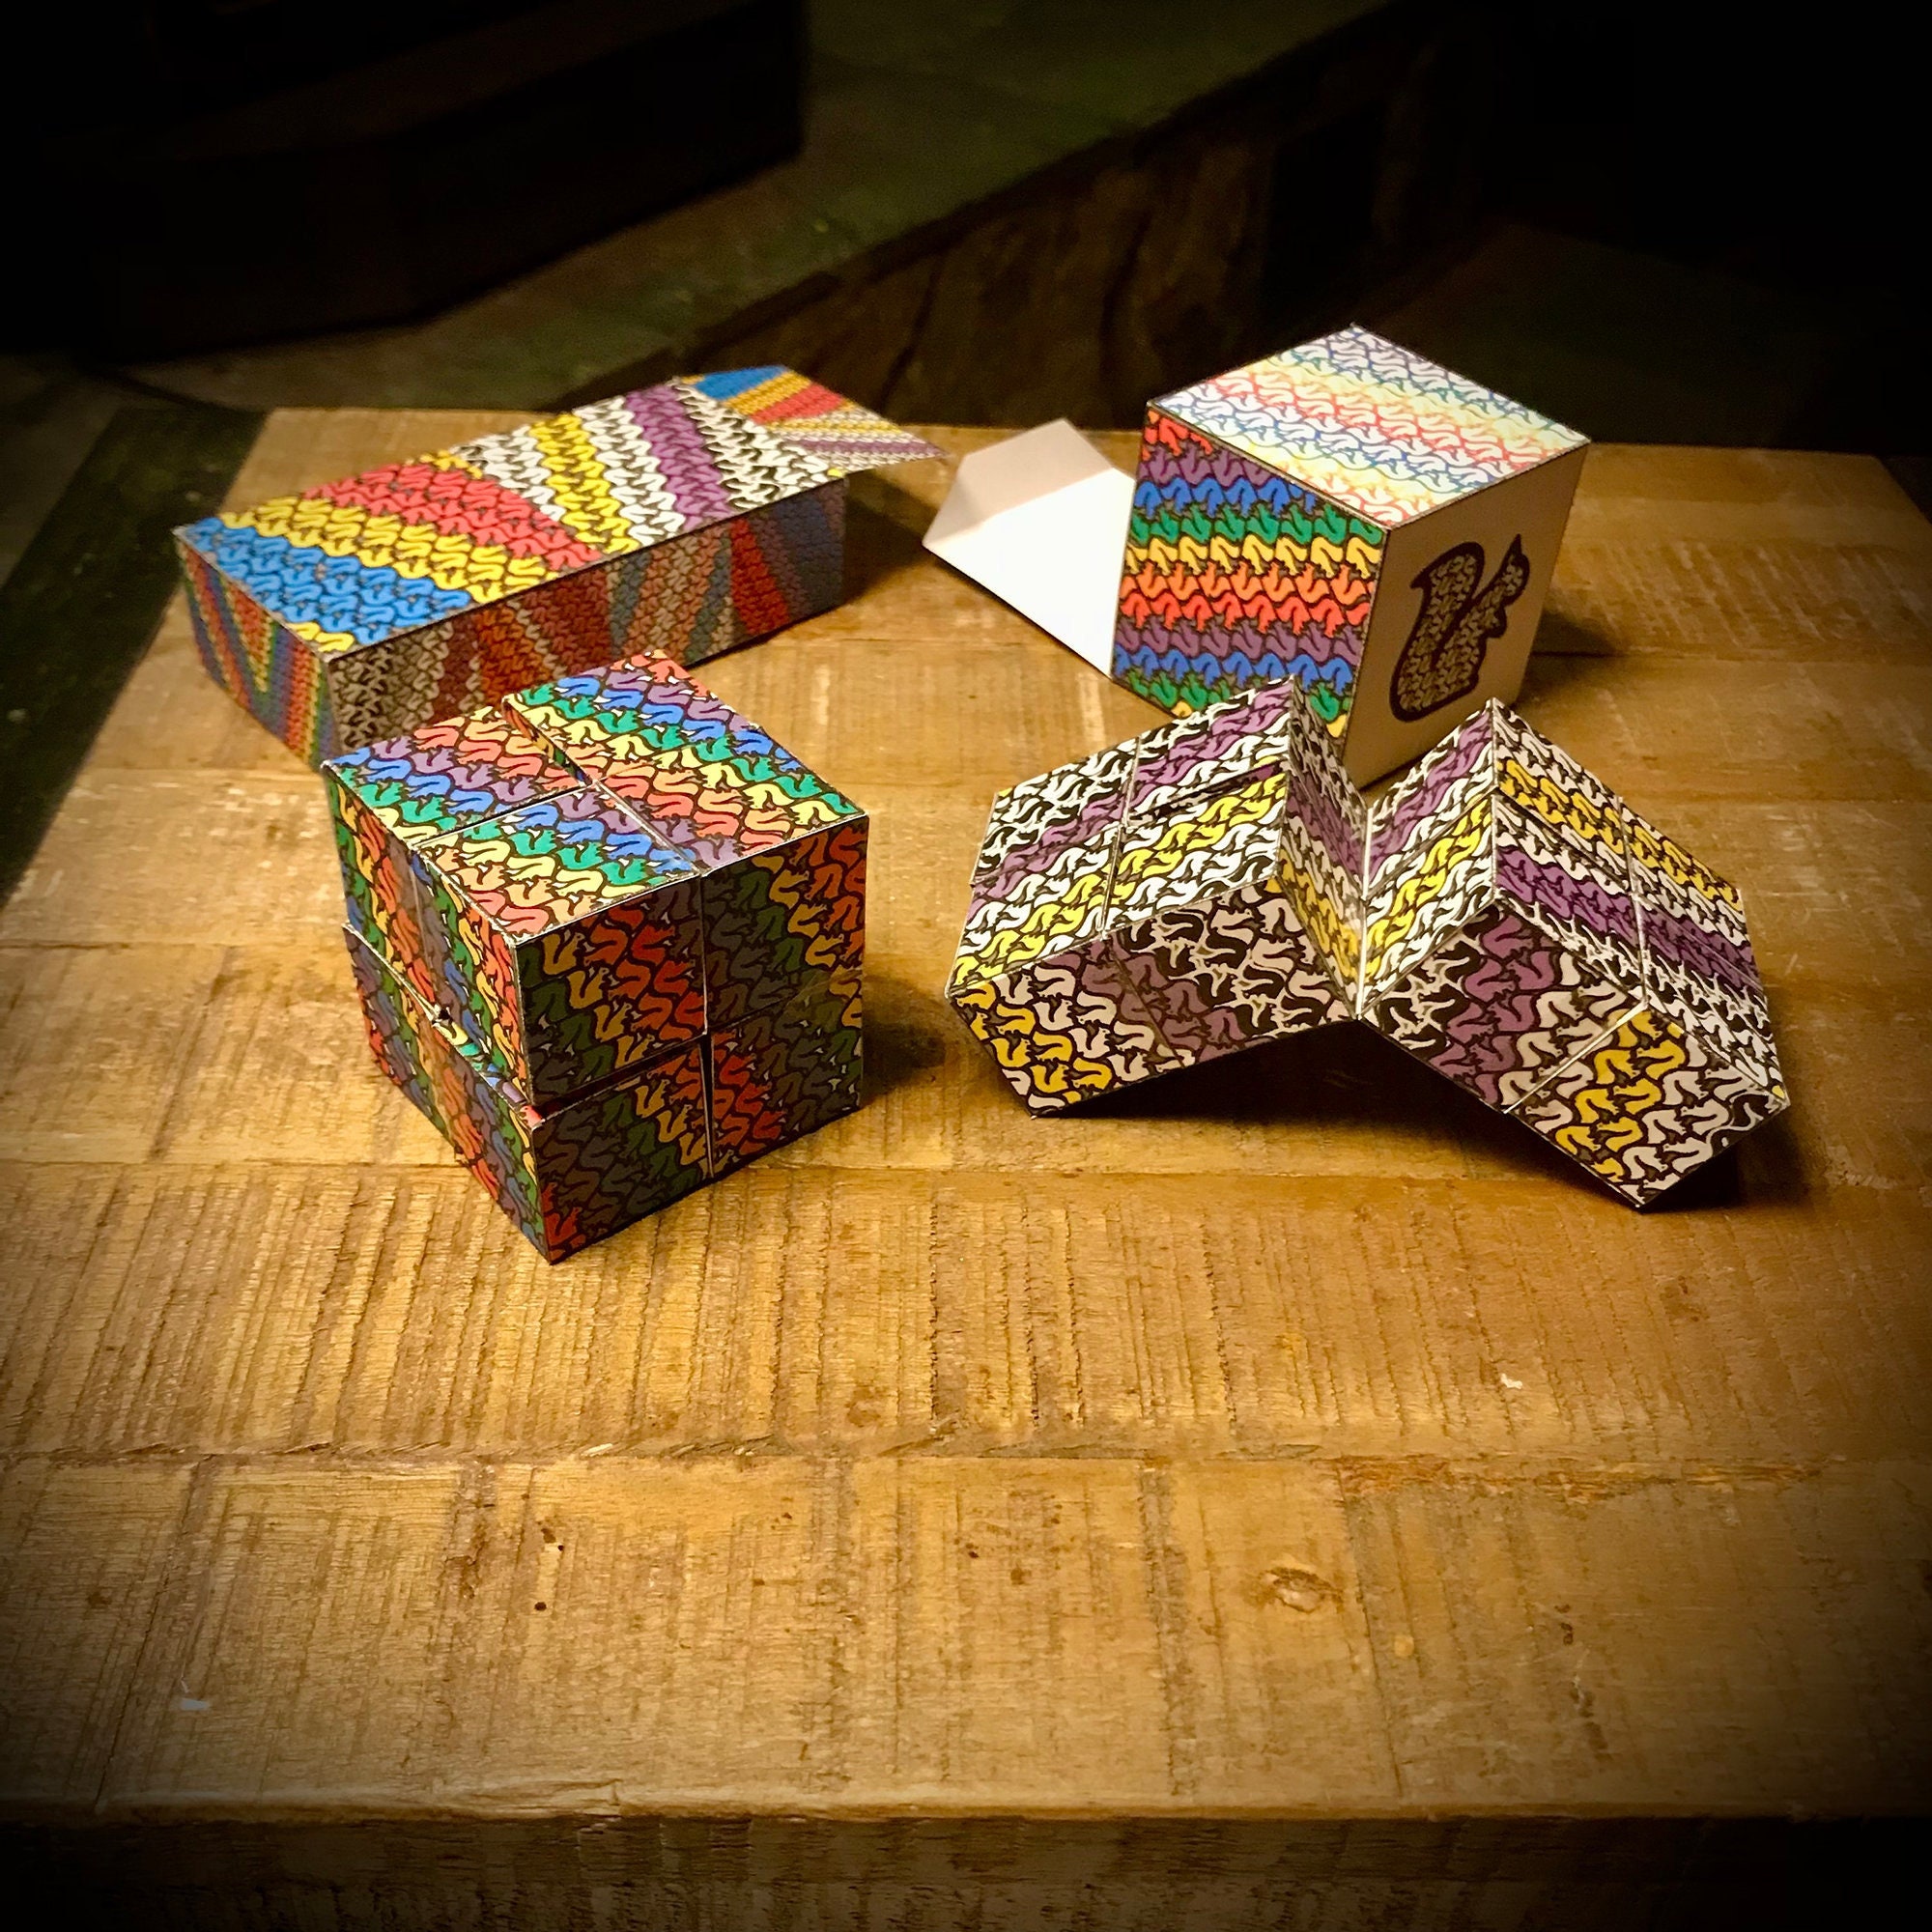 Big Floppa Cube Papercraft Template. DIY Lowpoly Toy. 3D Origami Big Floppa